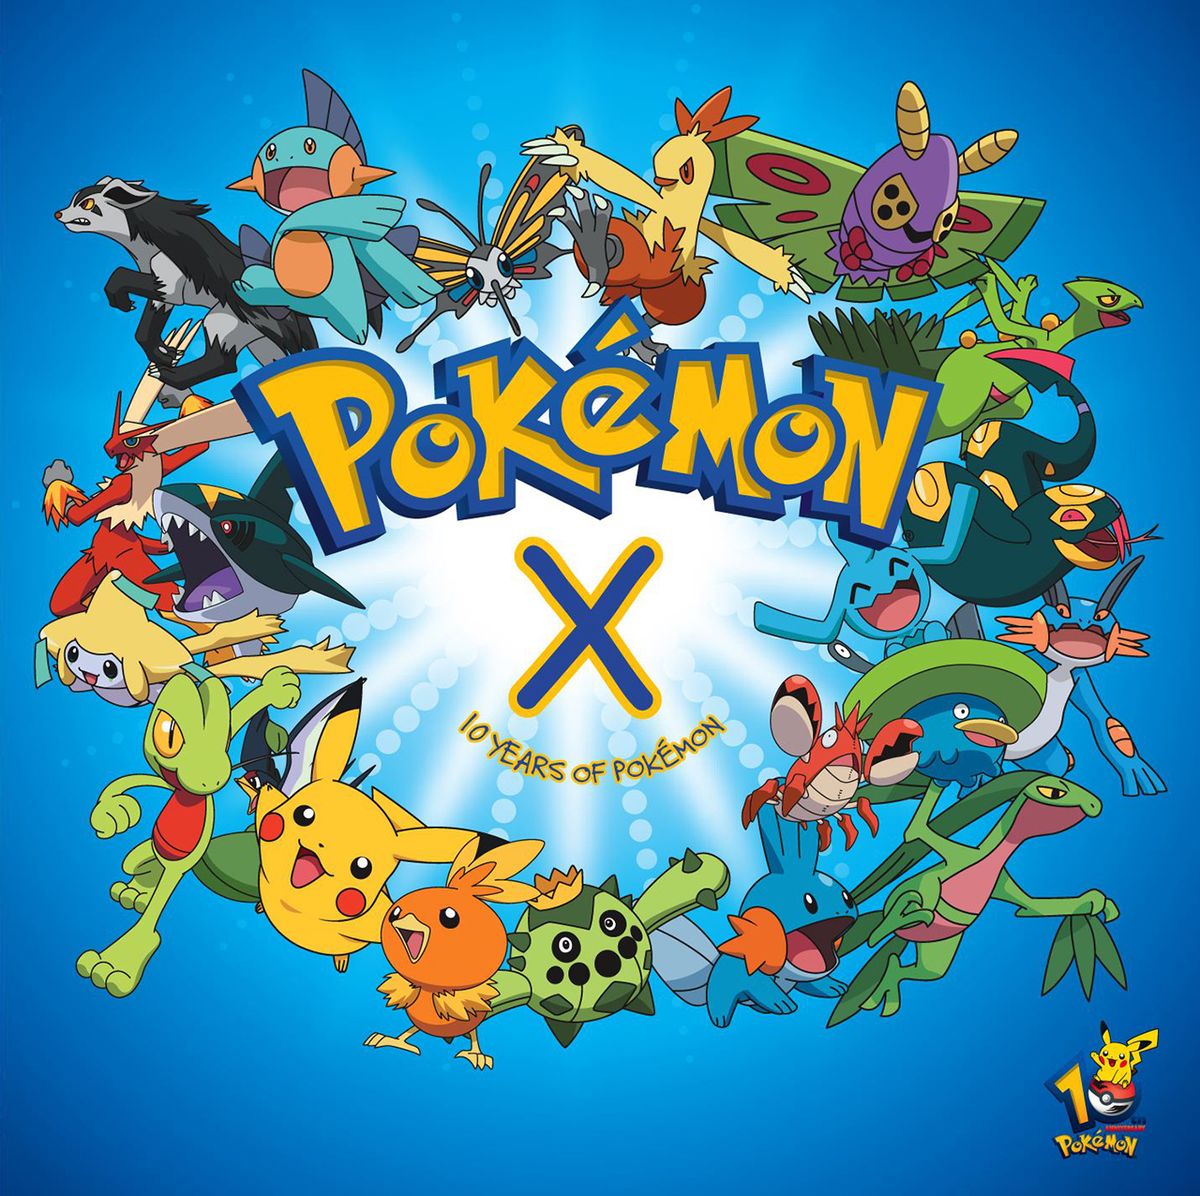 Eigenlijk Onvoorziene omstandigheden Nominaal Pokémon X (CD) - Bulbapedia, the community-driven Pokémon encyclopedia